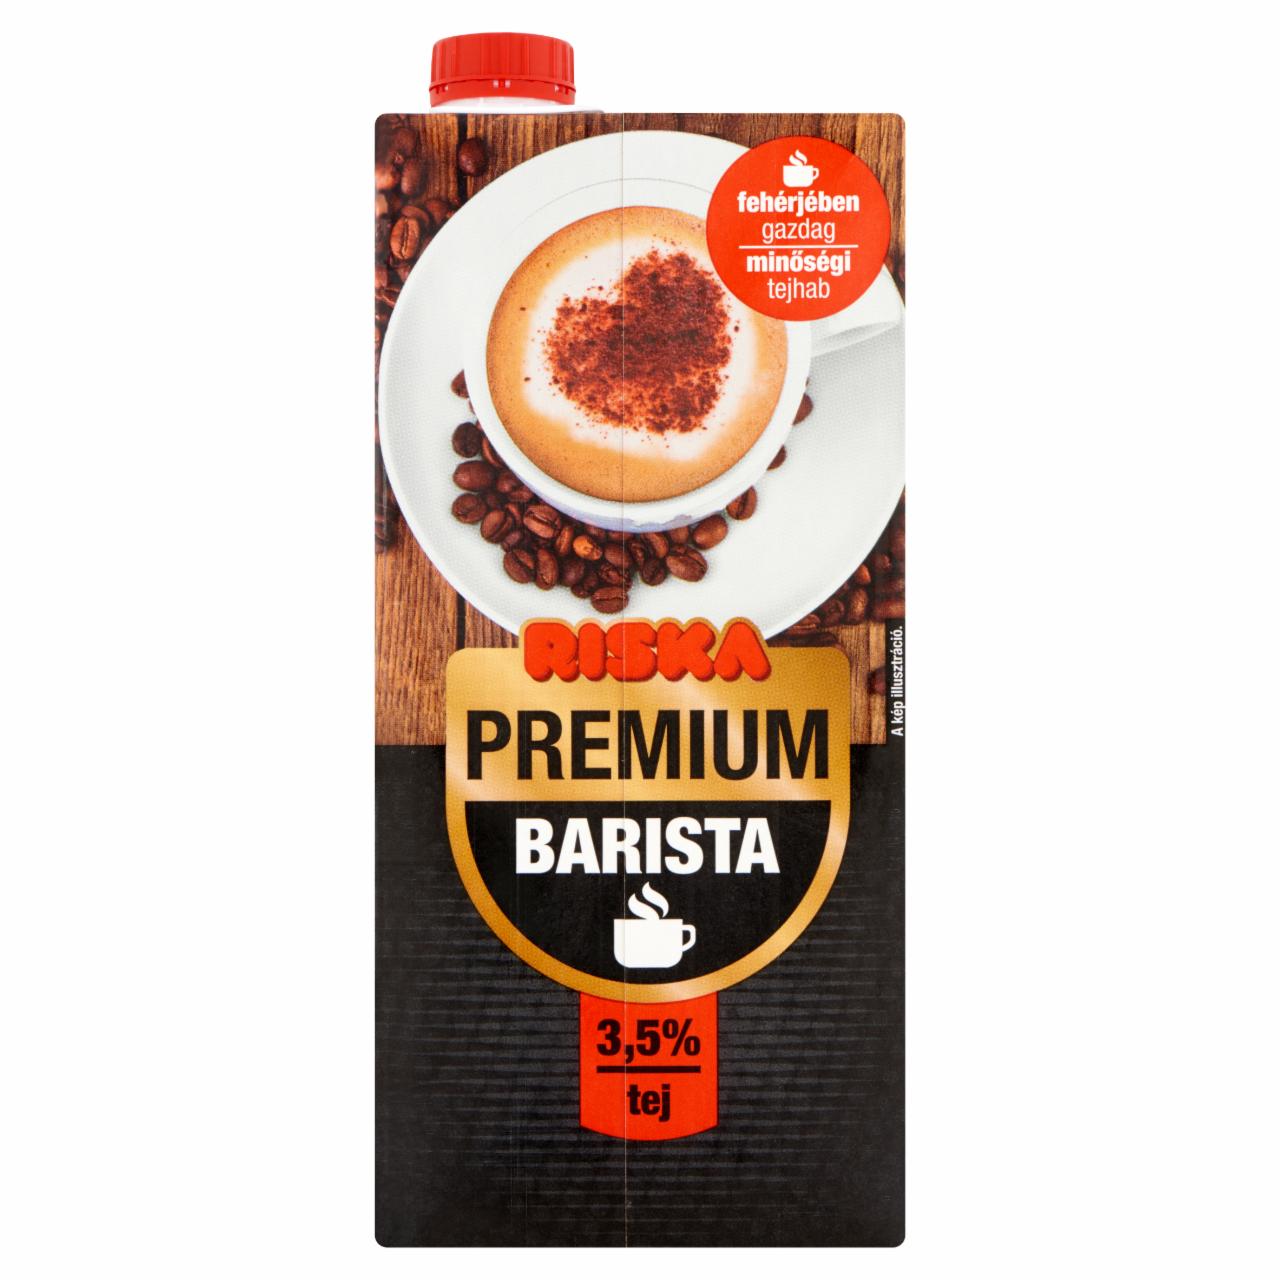 Képek - Riska Premium Barista UHT fehérjében gazdag teljes tej 3,5% 1000 ml